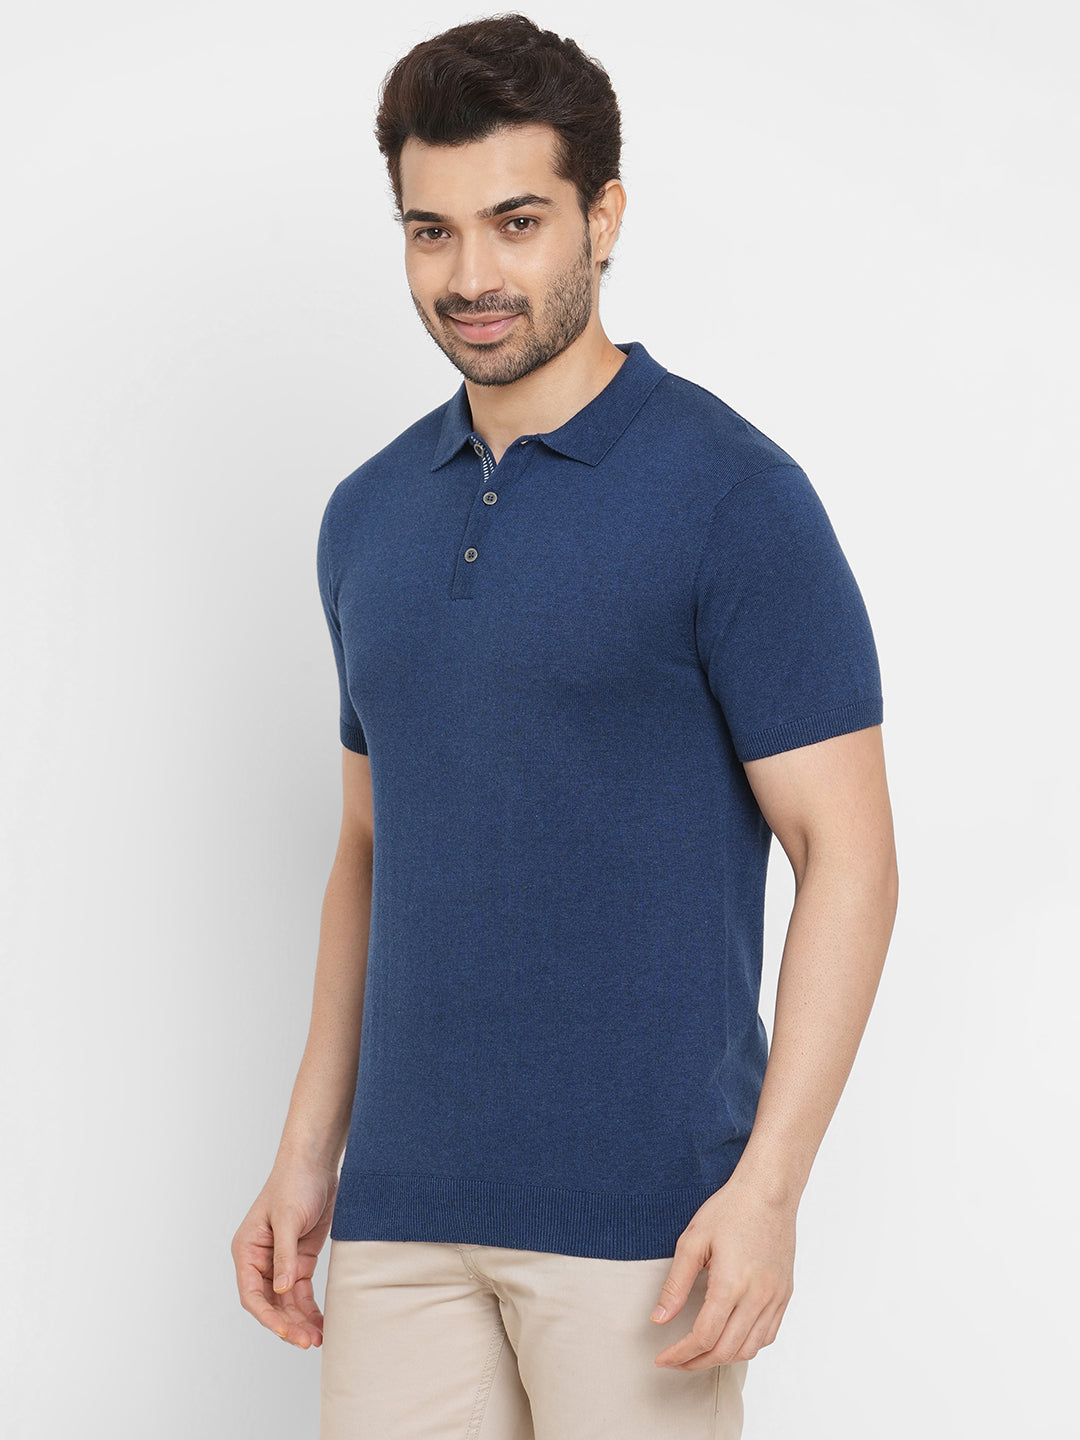 Men's Cotton Blend Short Sleeved Regular Fit Navy Tshirt